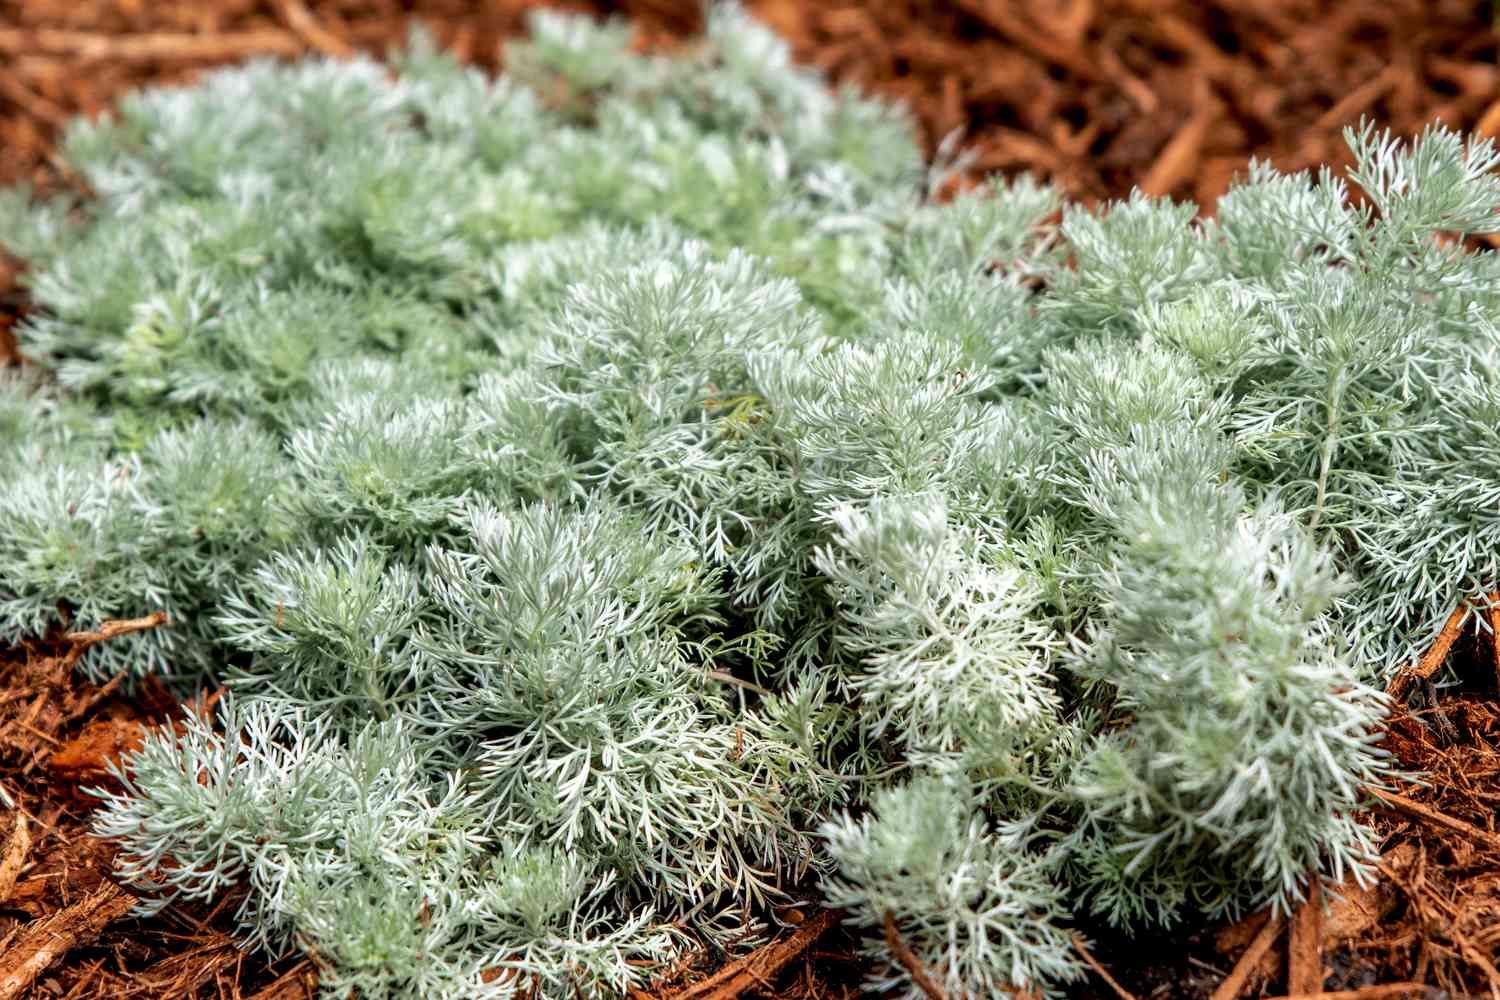 'Silberhügel'-Artemisia-Pflanze mit silbrig-grünen, spitzenartigen Blättern über Mulch verklumpt